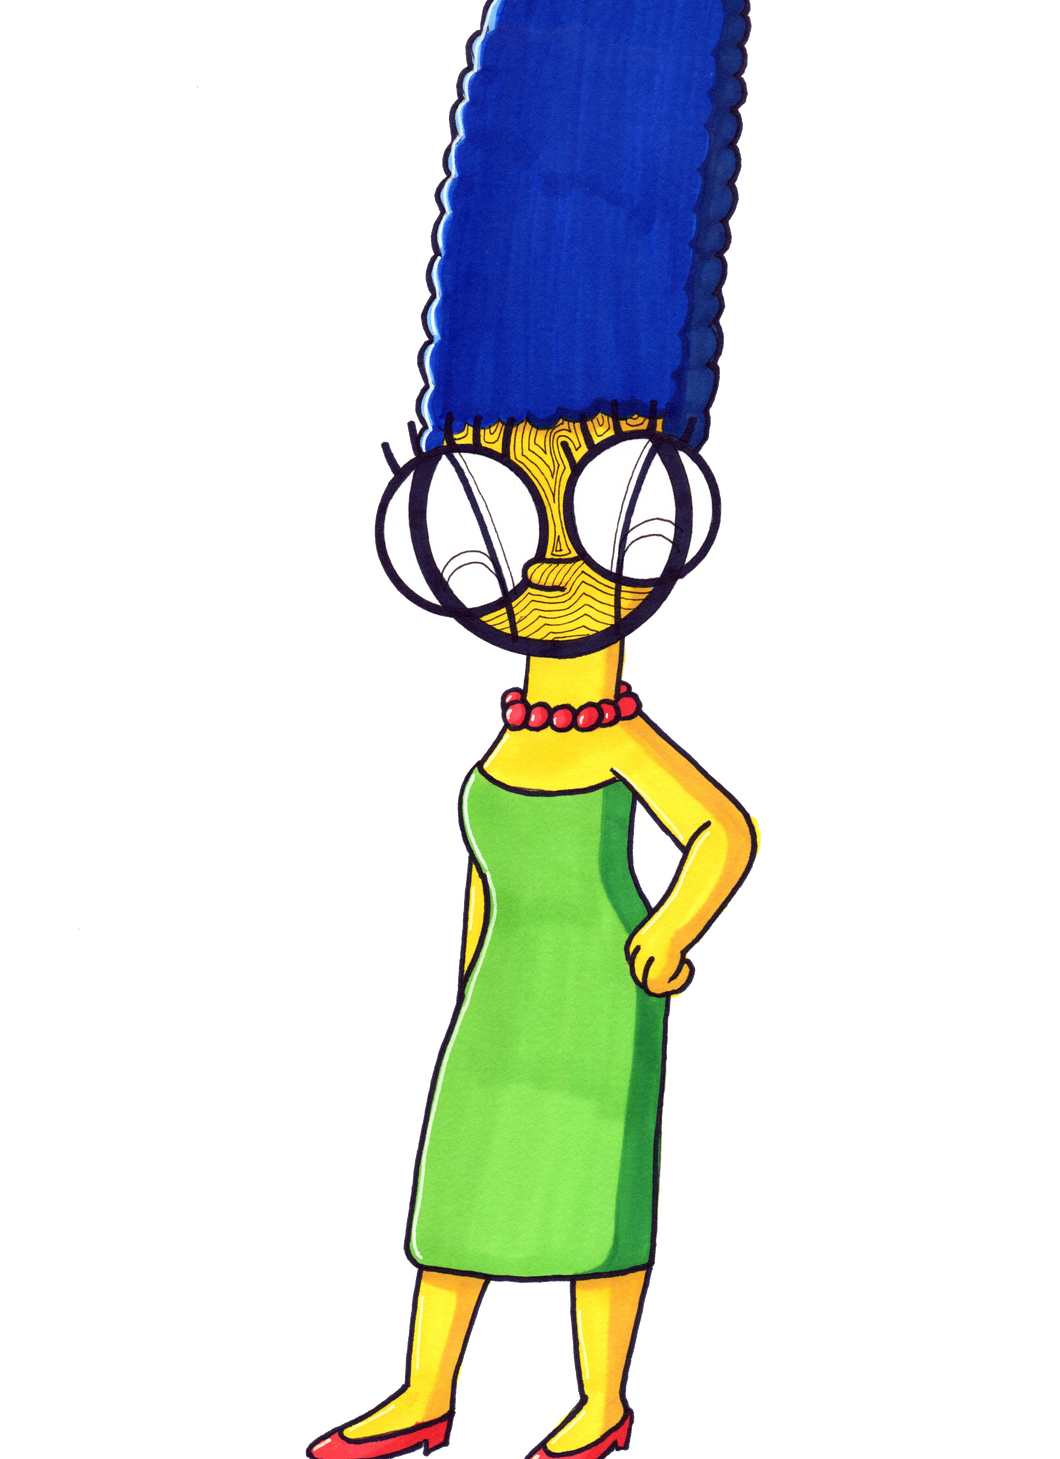 Marge Simpson 8x10 original art print by Harth Creations